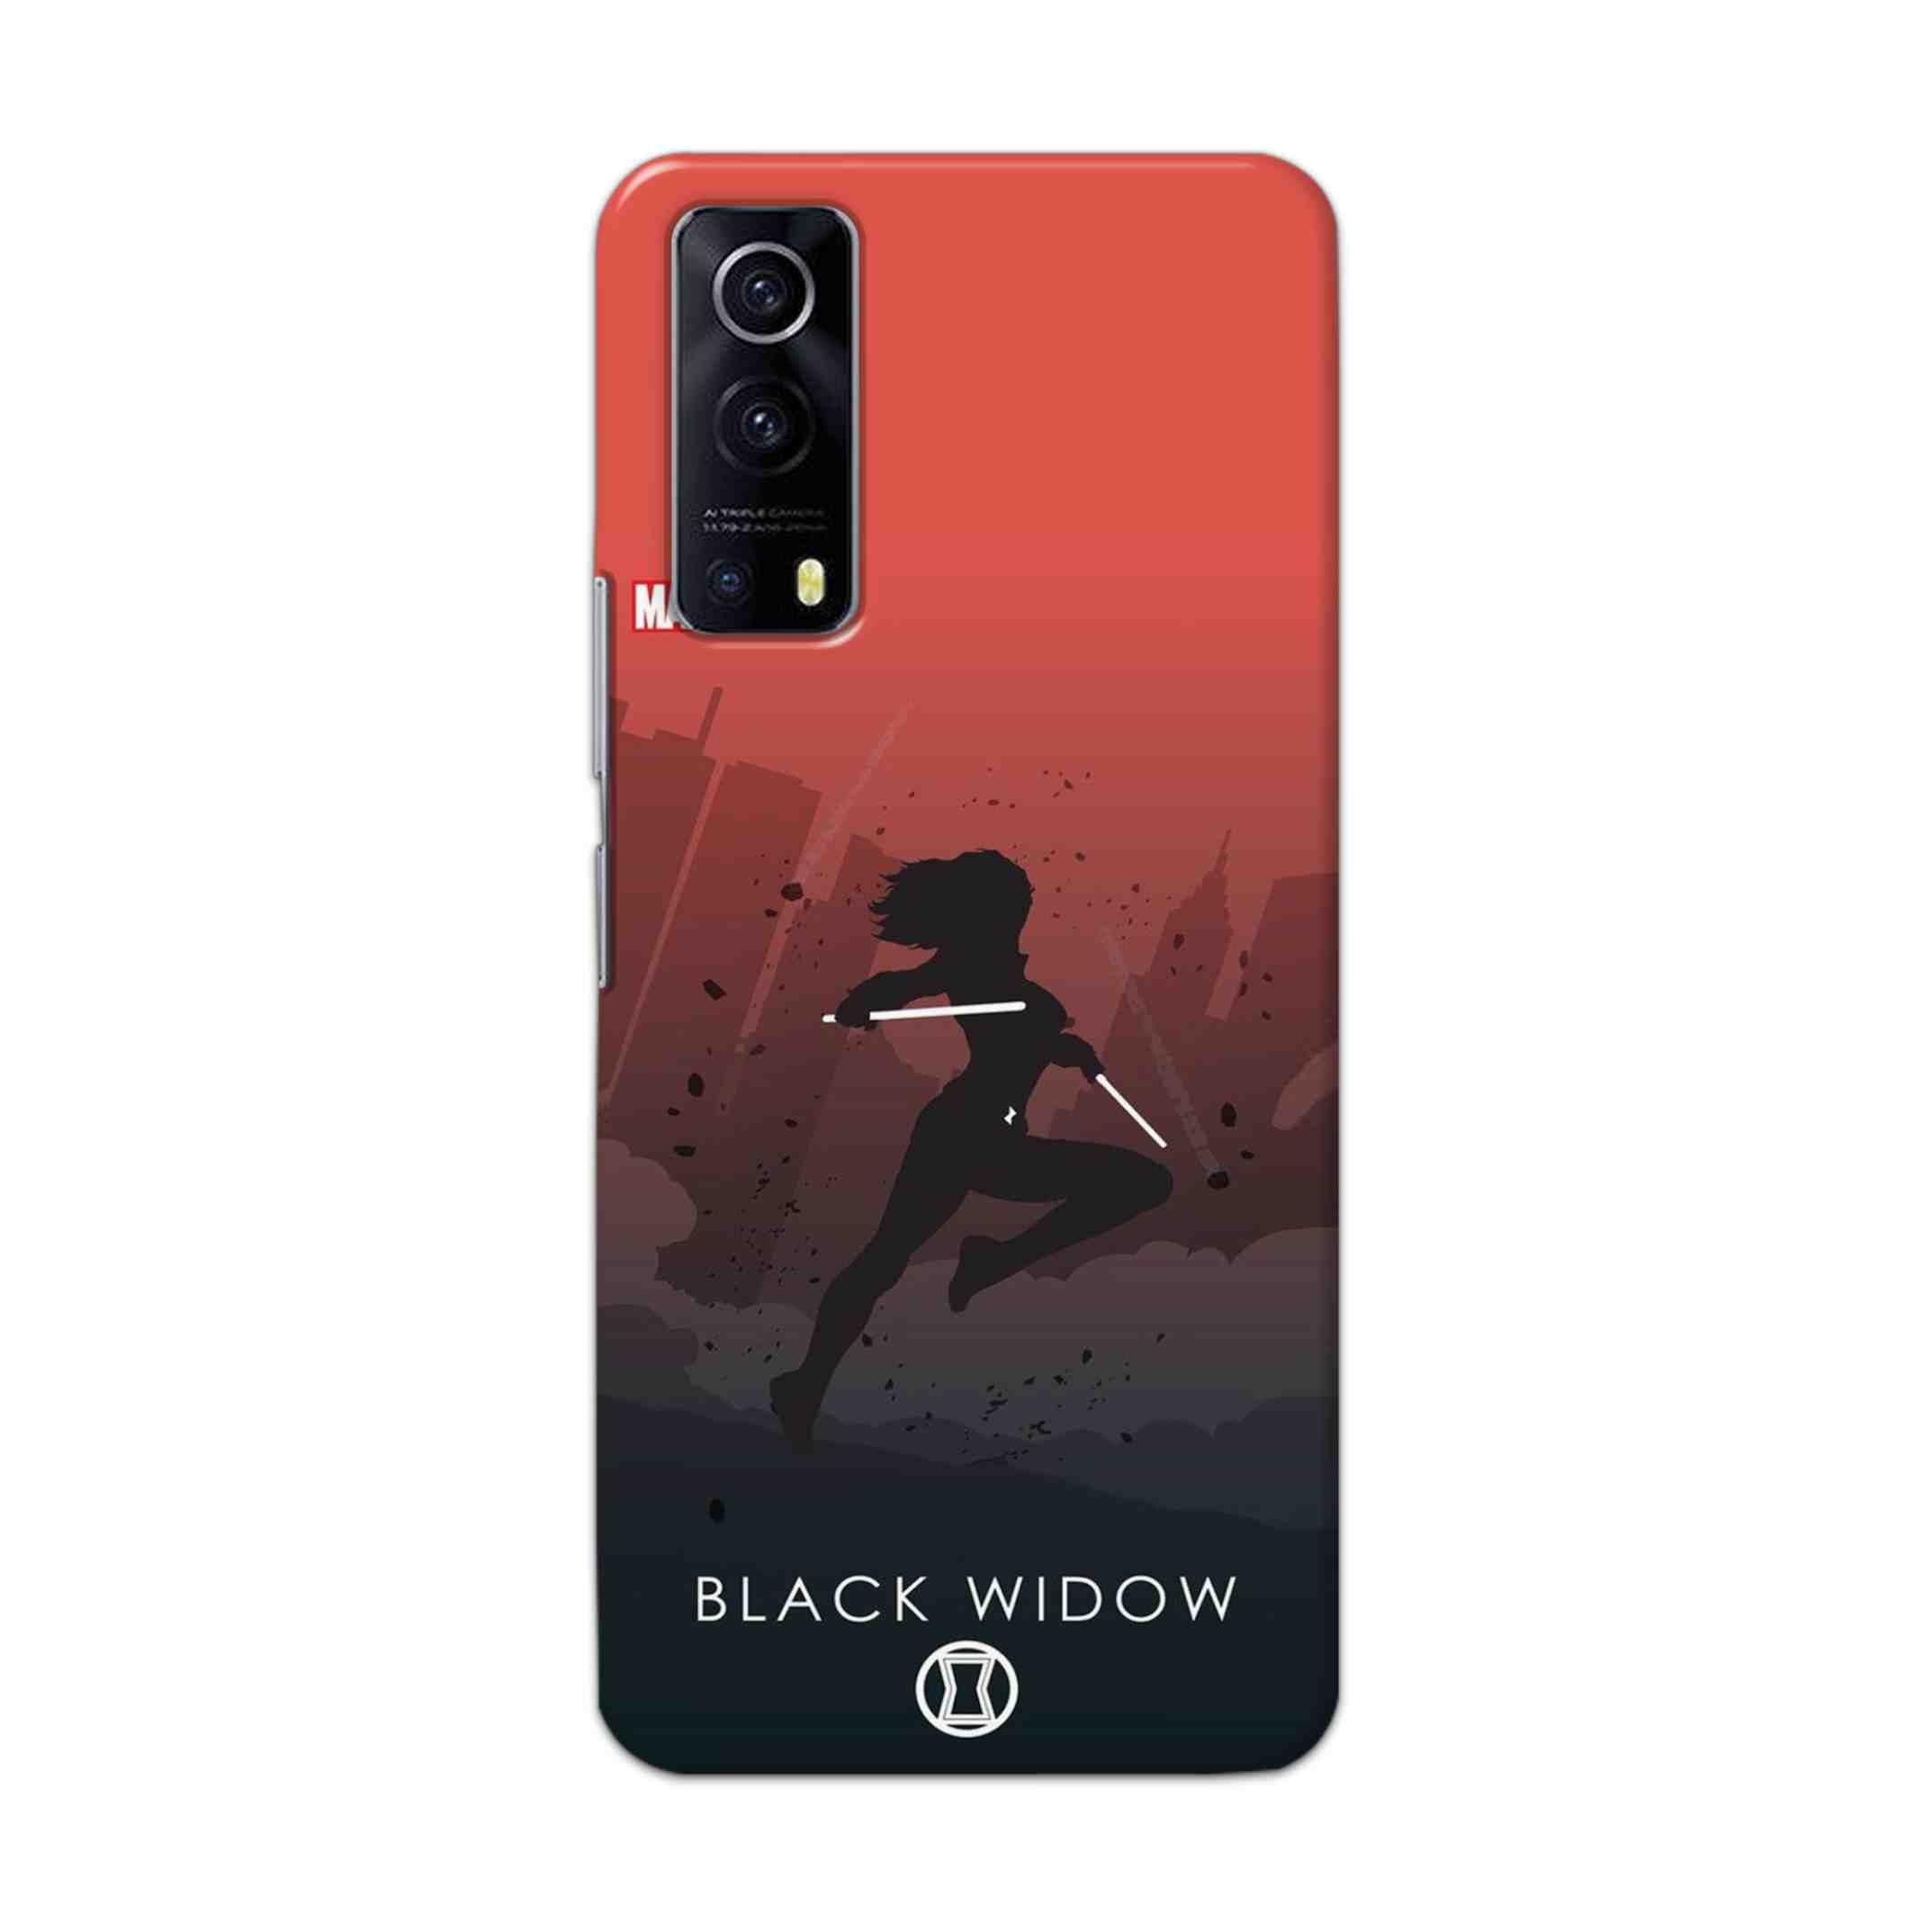 Buy Black Widow Hard Back Mobile Phone Case Cover For Vivo IQOO Z3 Online